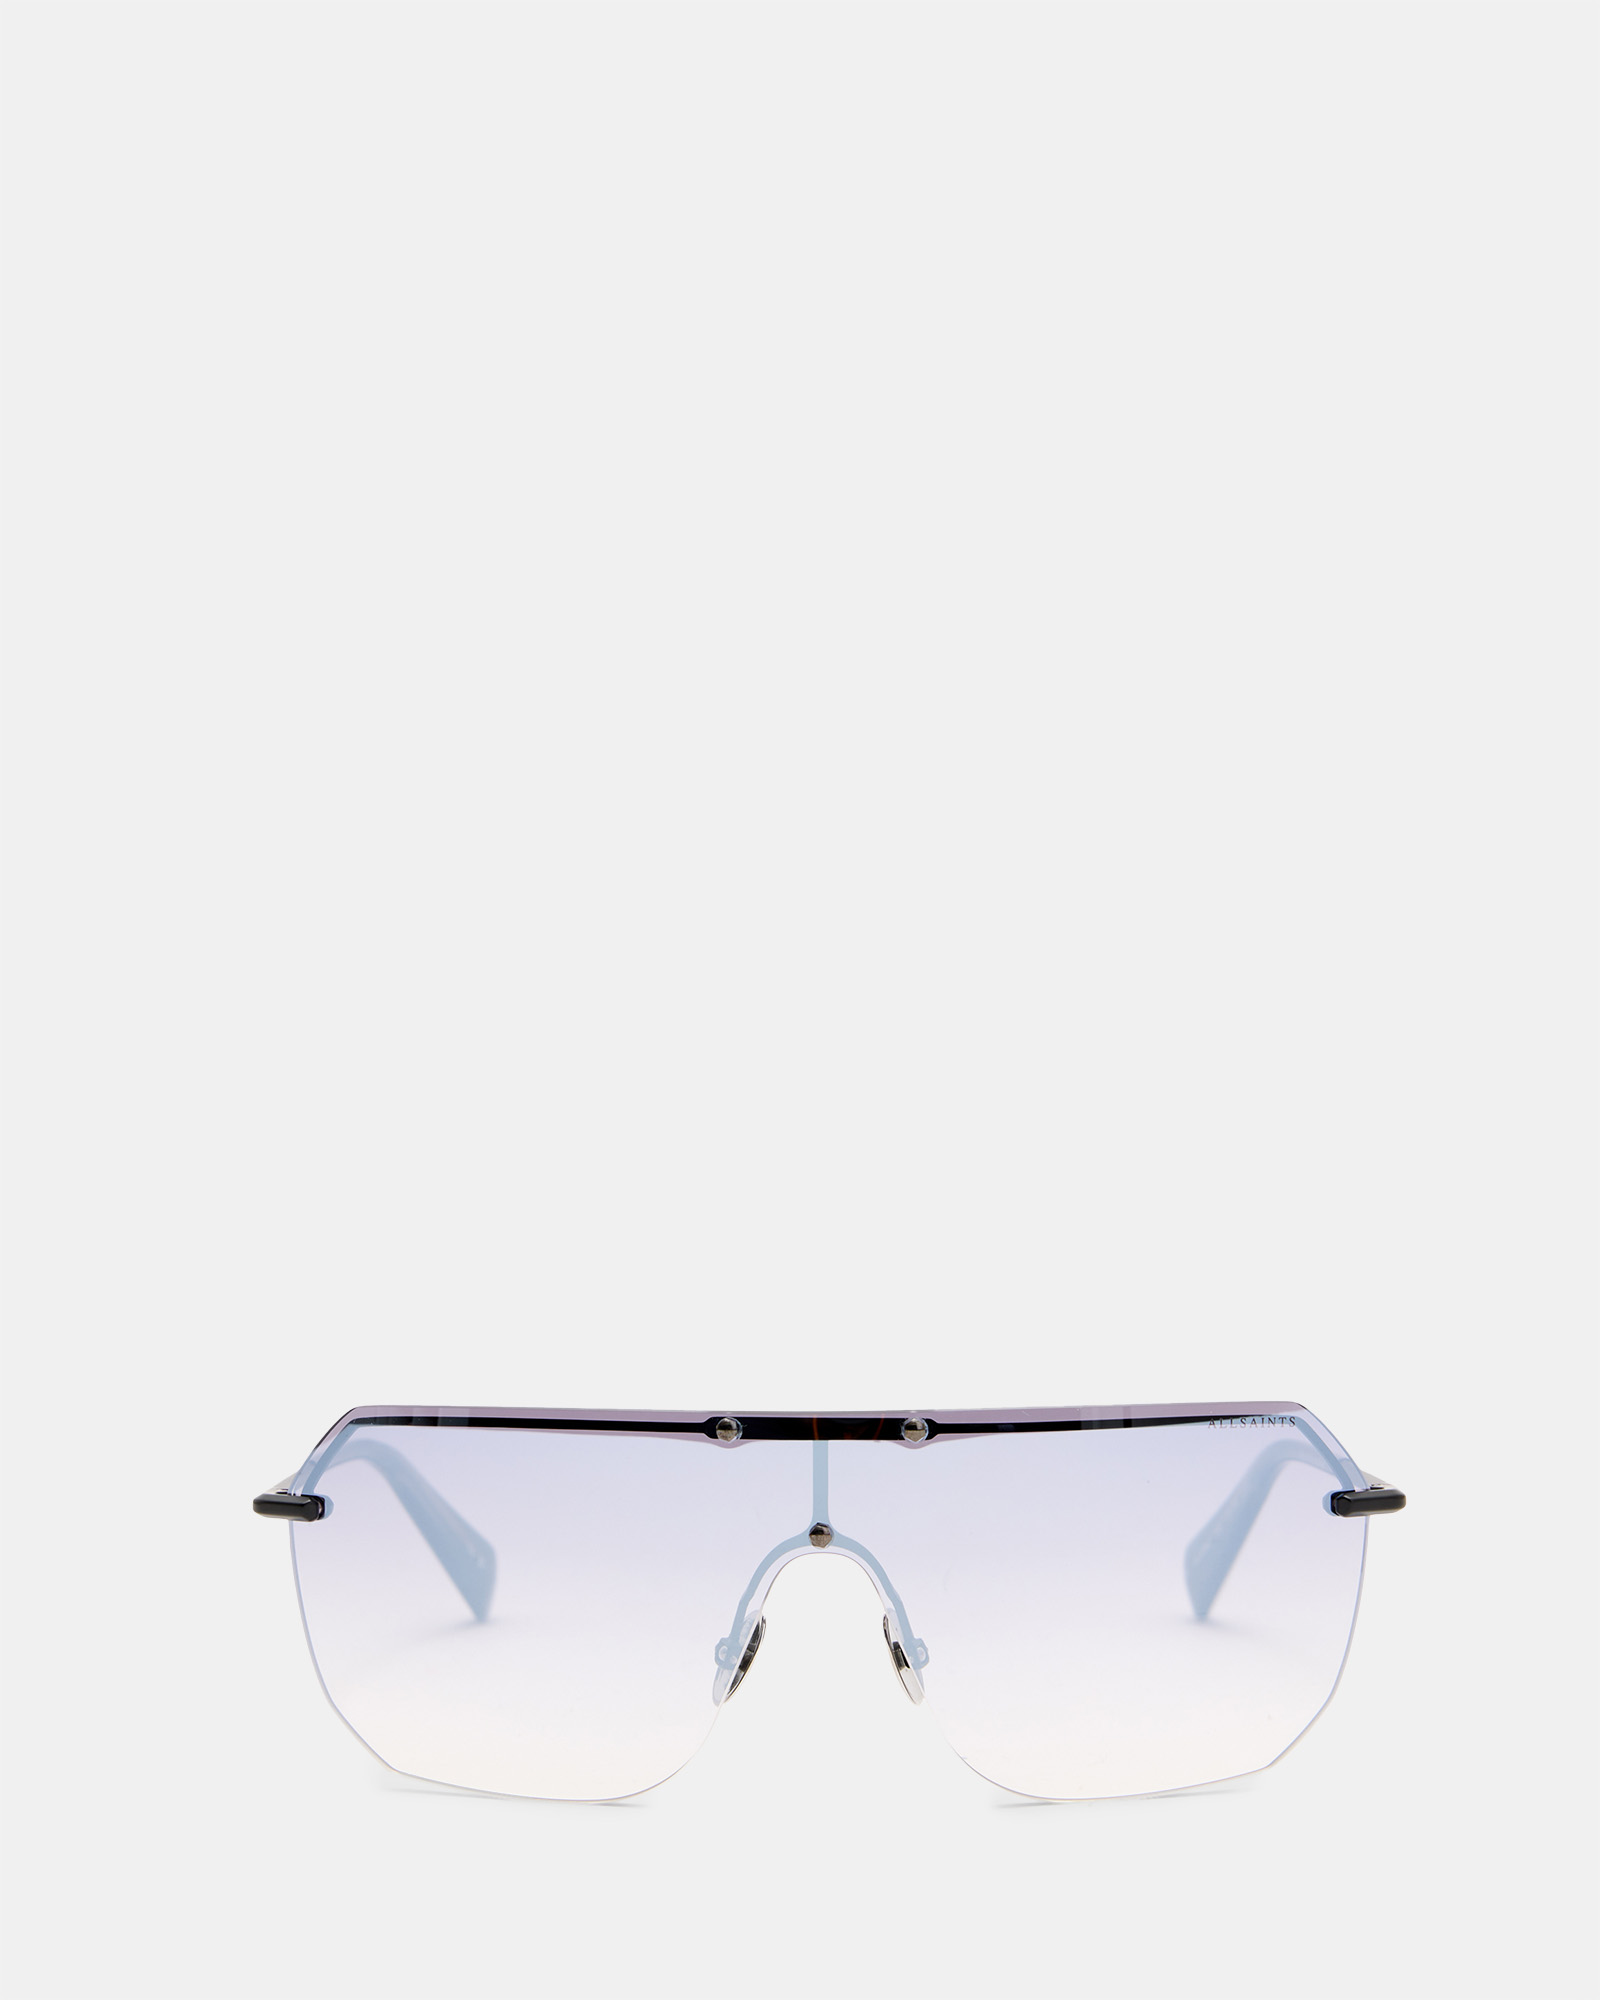 AllSaints Ace Rimless Visor Sunglasses,, BLACK/MATTE BLACK